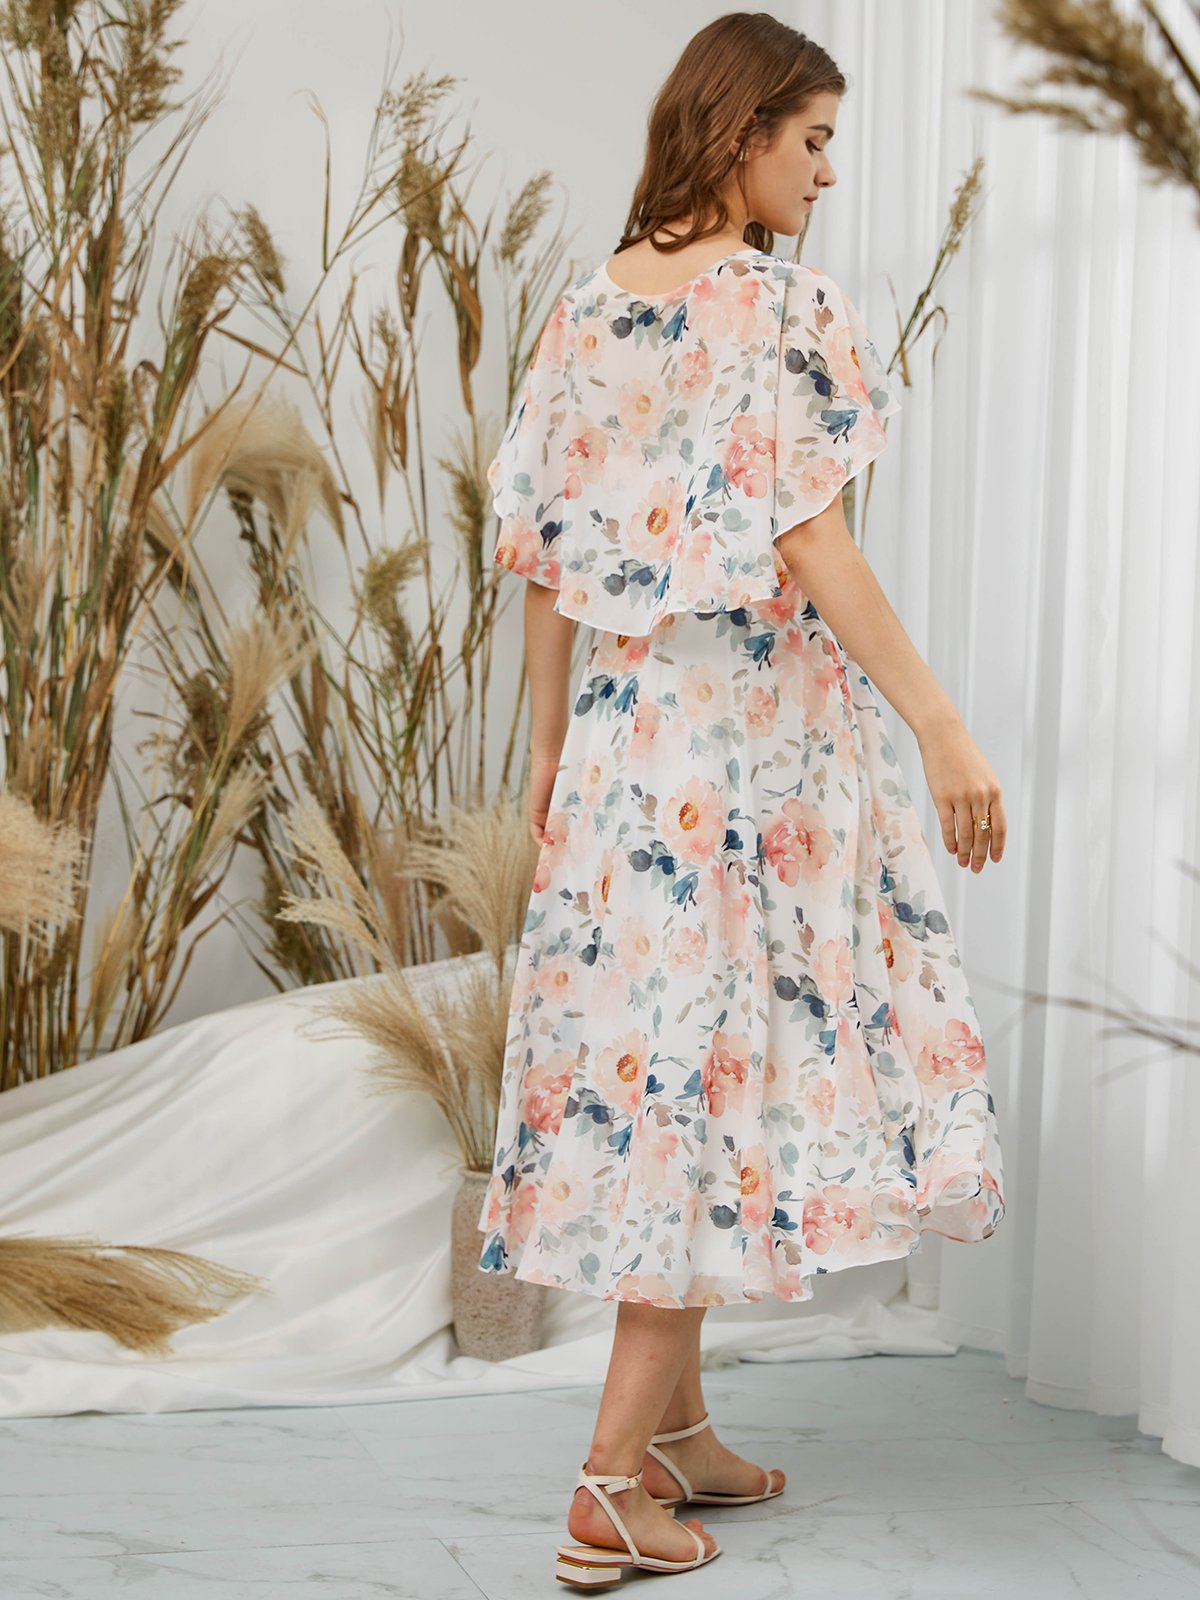 MissJophiel Cap Sleeves V Neck Chiffon Print Floral Peach Formal Party Dress